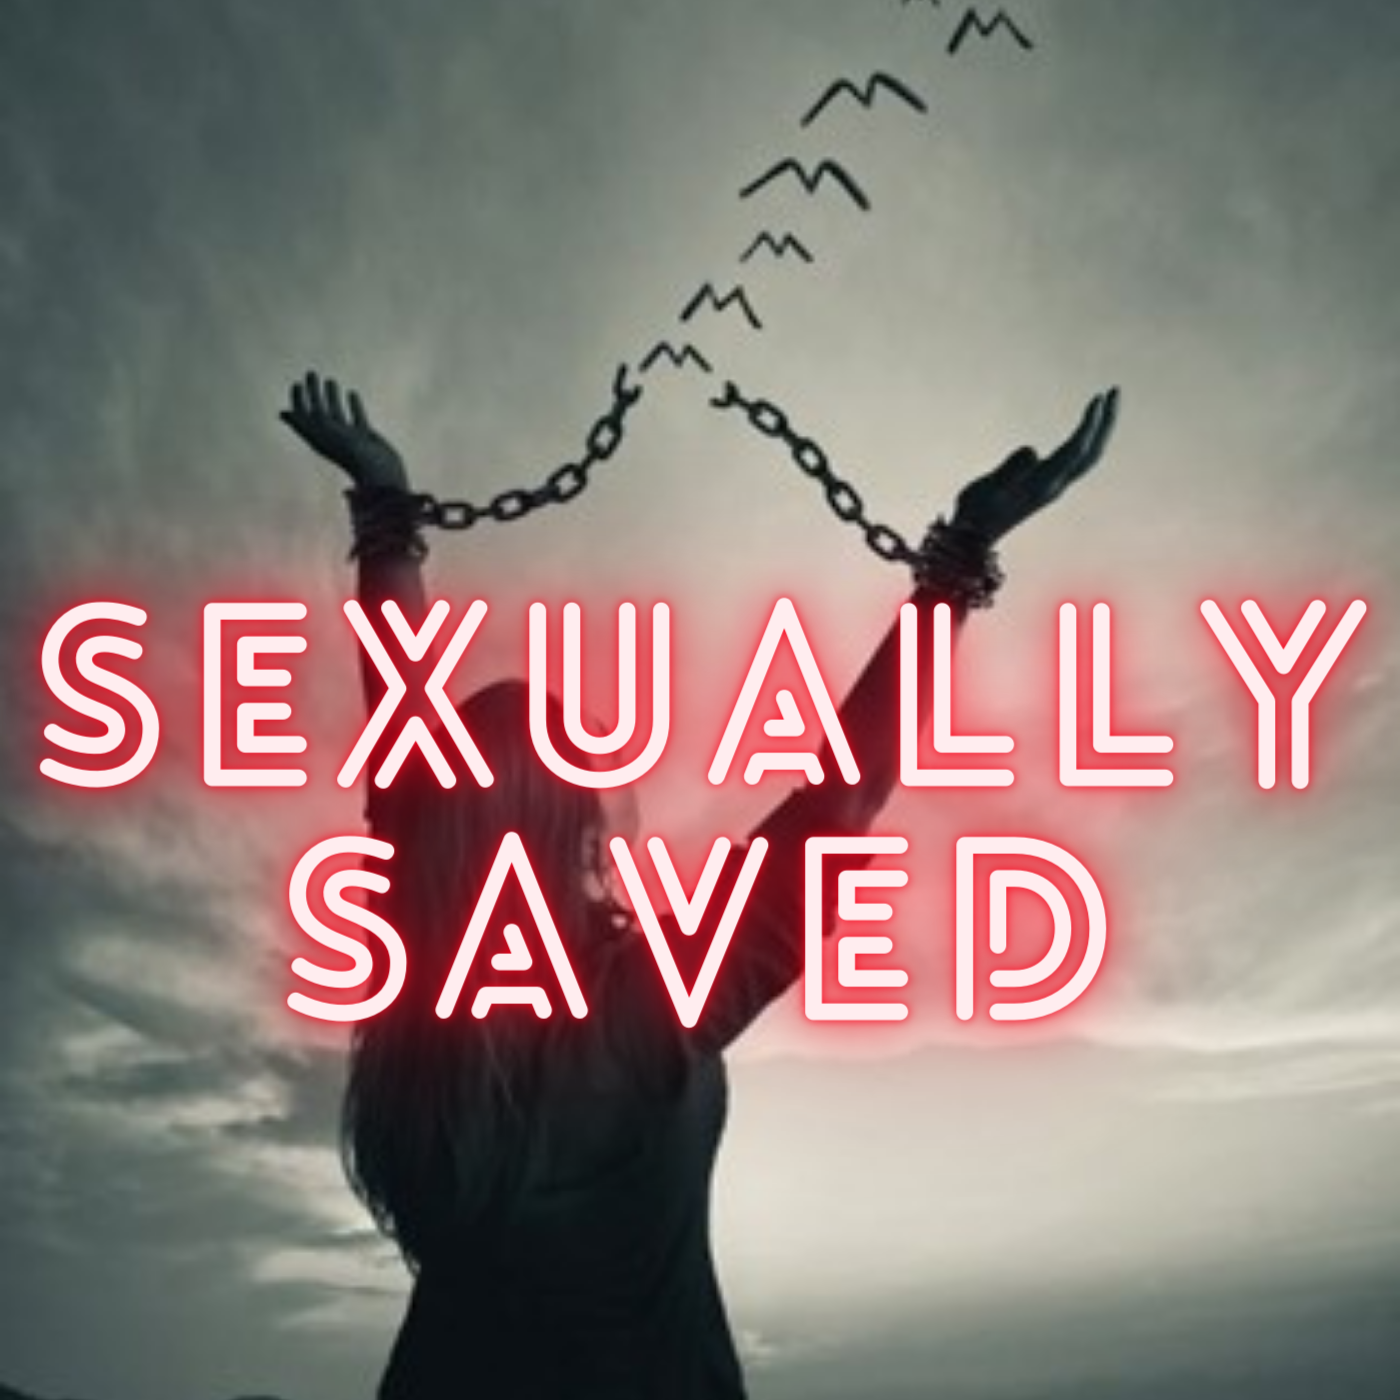 SEXUALLY SAVED